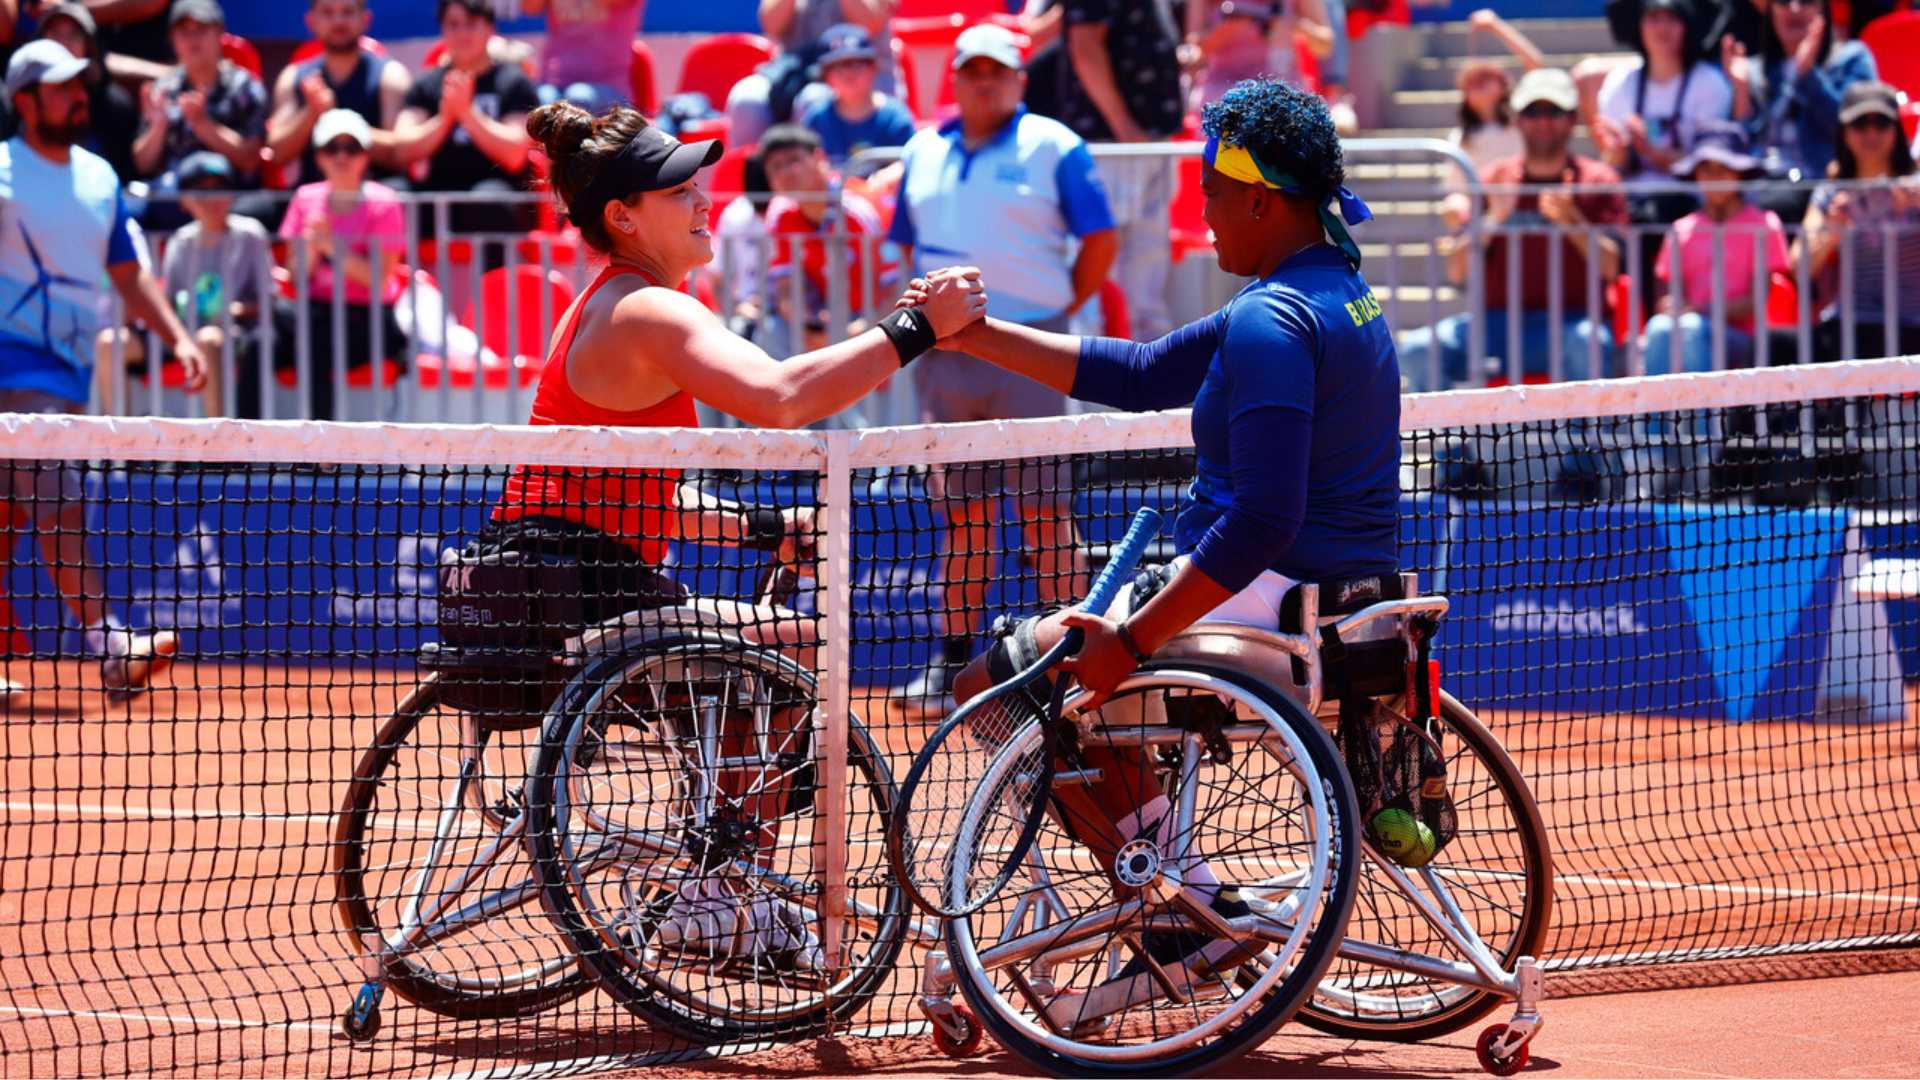 Wheelchair Tennis: American Mathewson Makes Clear Debut Victory